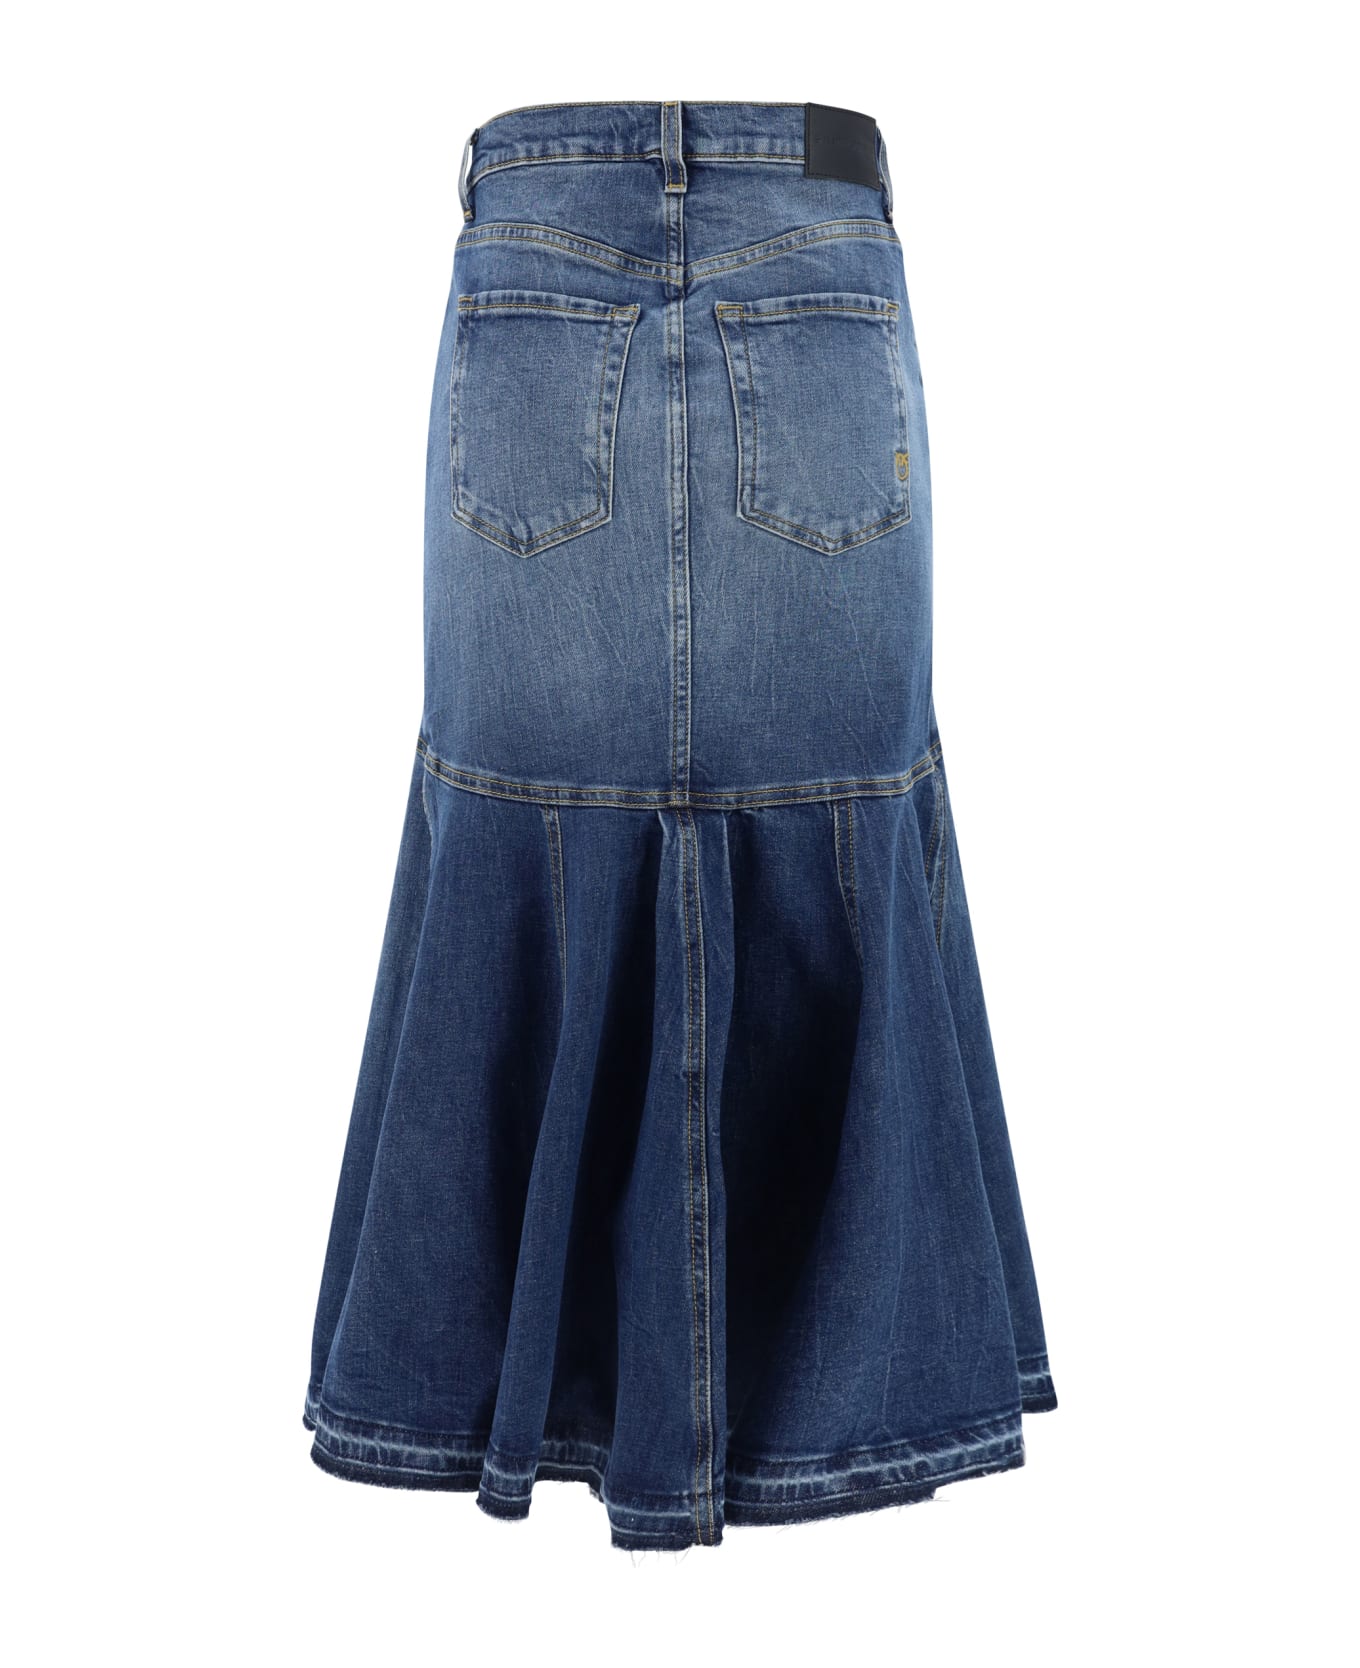 Pinko Ghirla Denim Skirt - Lavaggio Vintage Medio Scuro